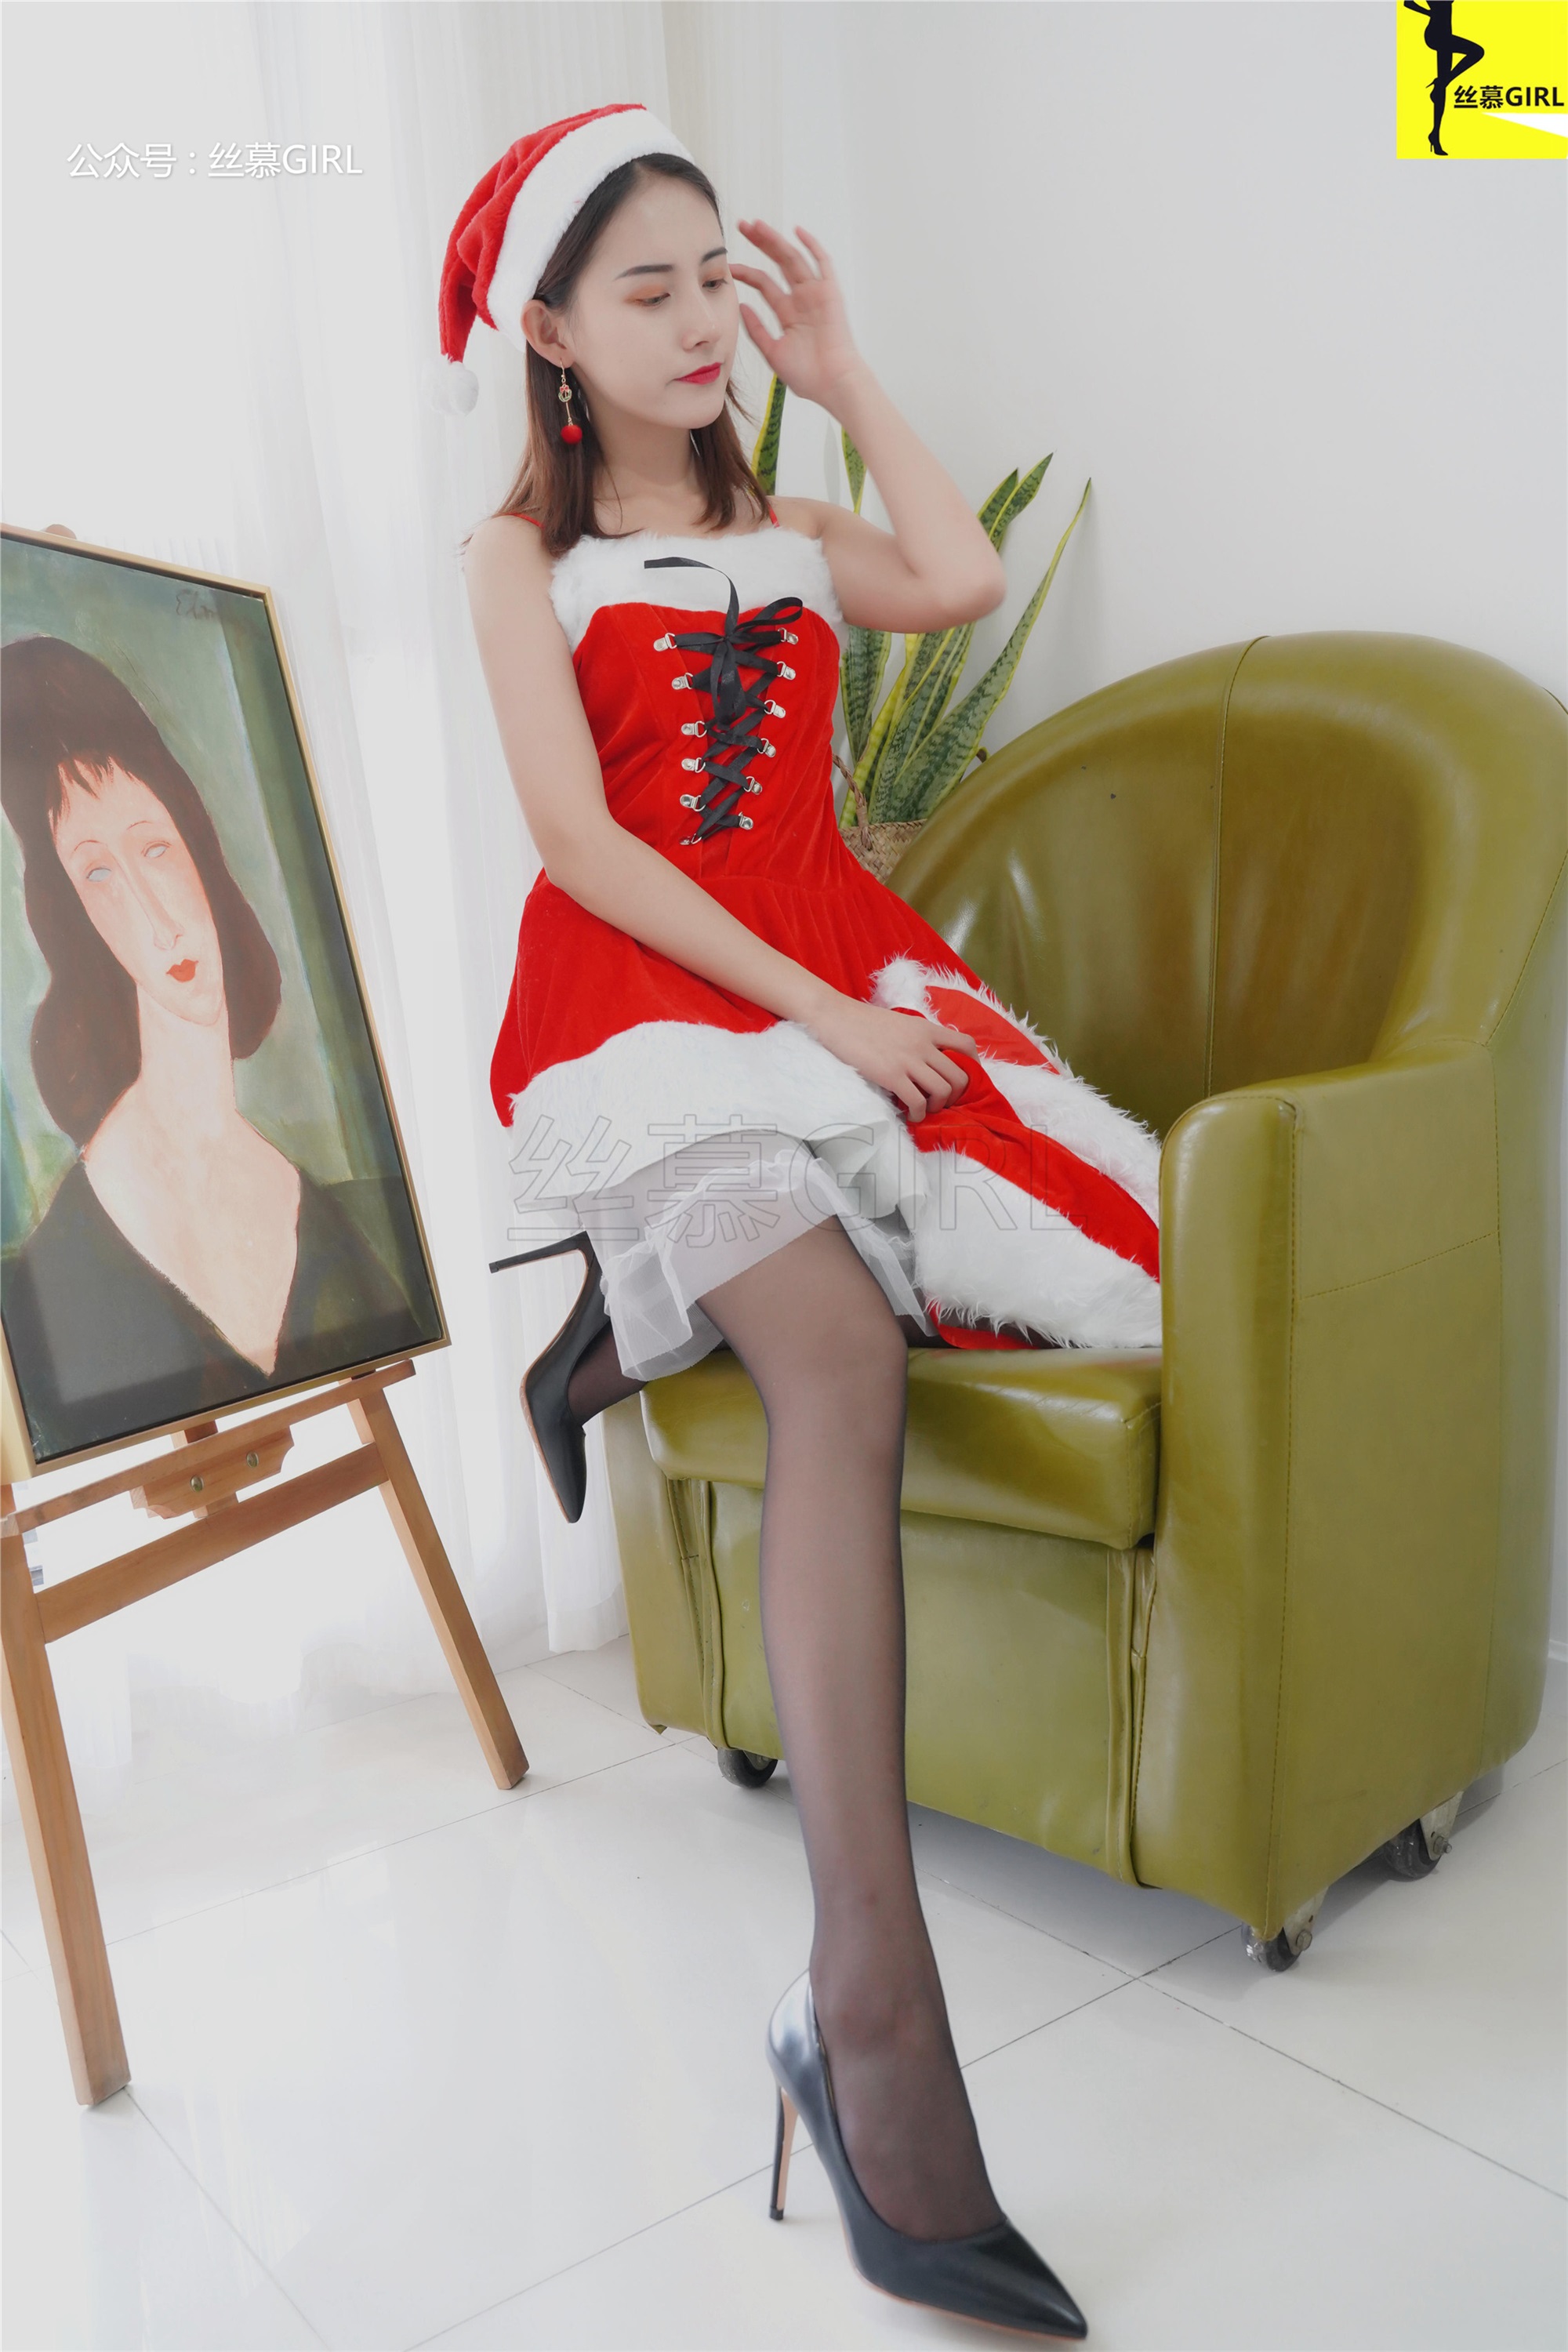 Simu photo issue 041 model: Ting Yi  Shuangshuang's Christmas Special